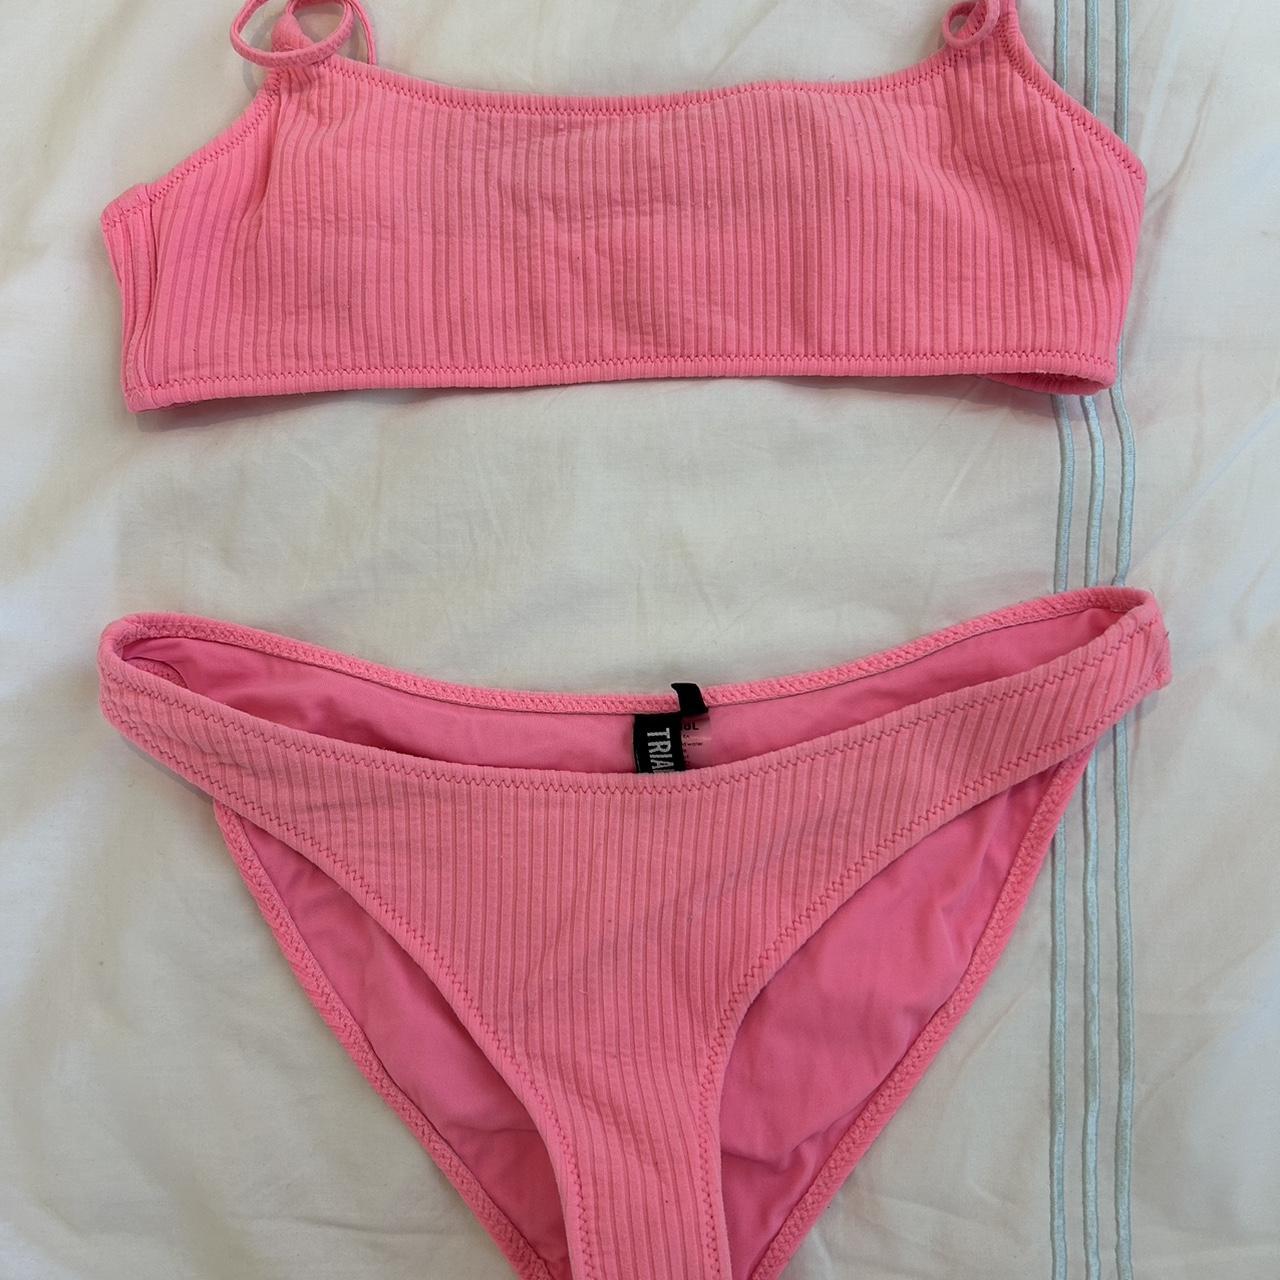 hot pink triangl bathing suit, minor wear on the - Depop